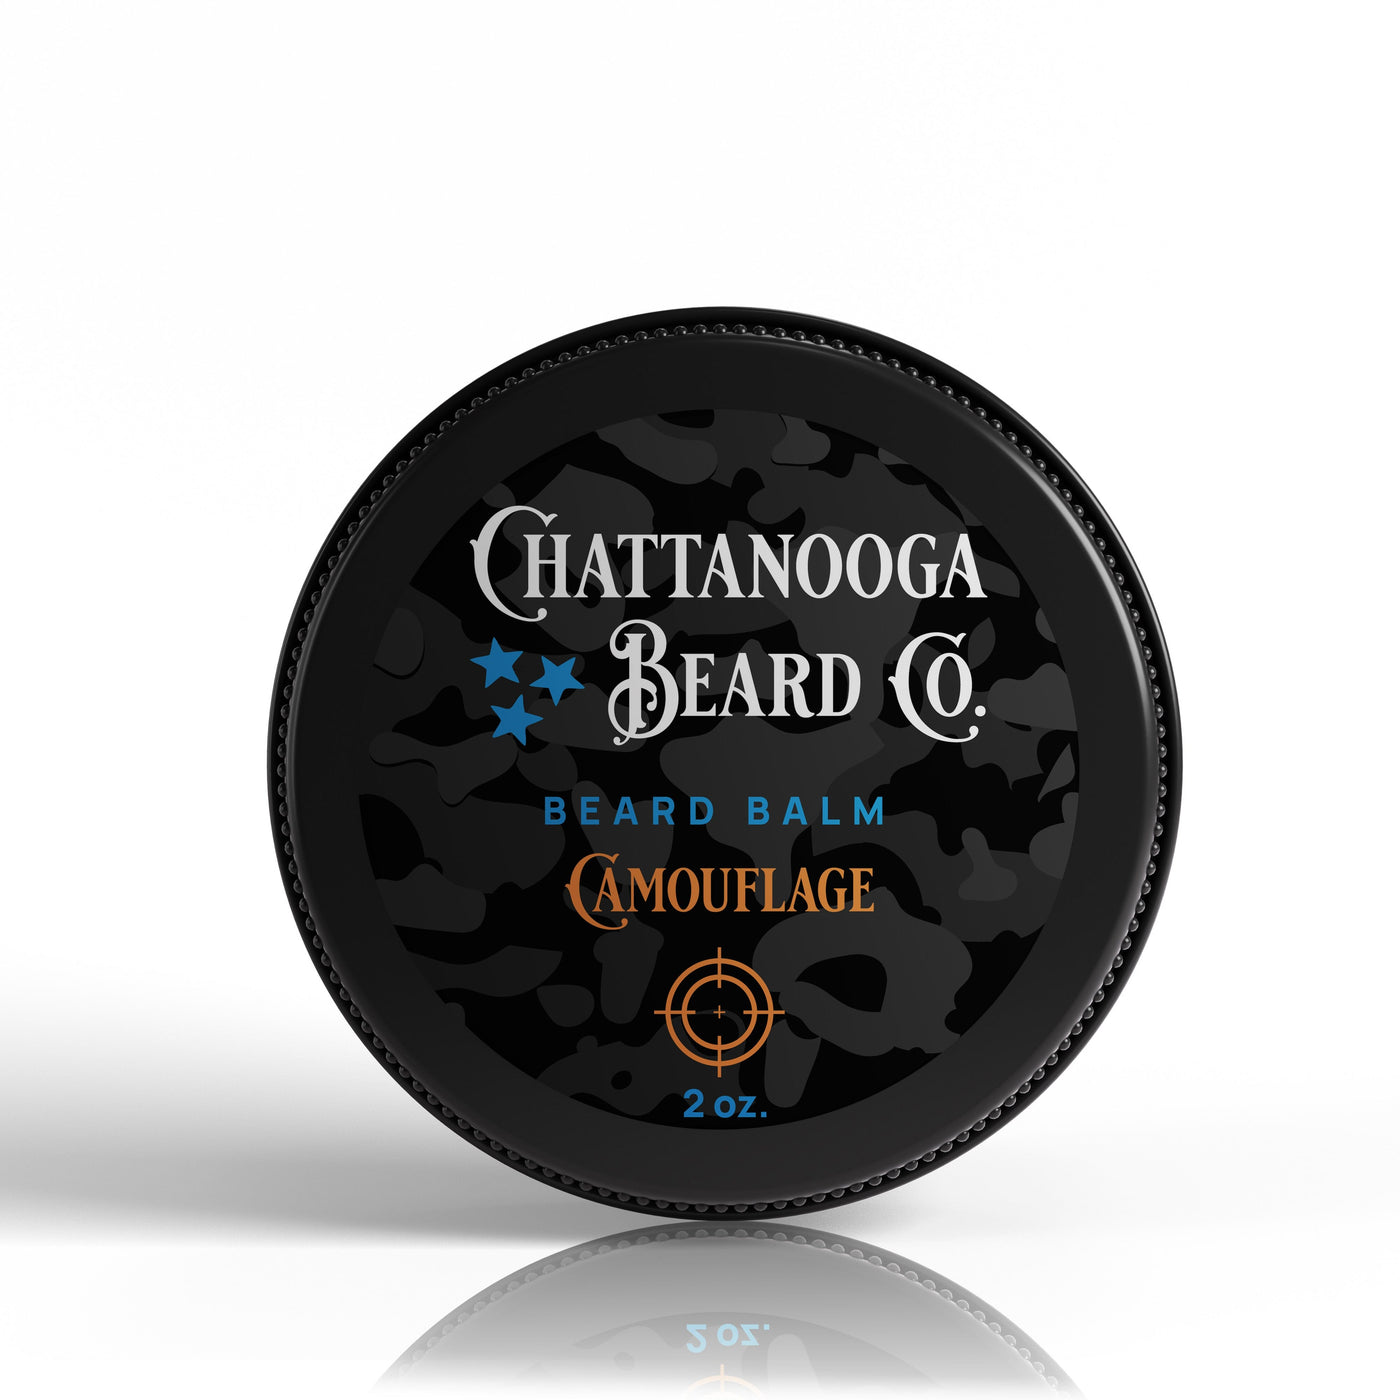 Chattanooga Beard Co. - Beard Balm Balm Chattanooga Beard Co. Camouflage 